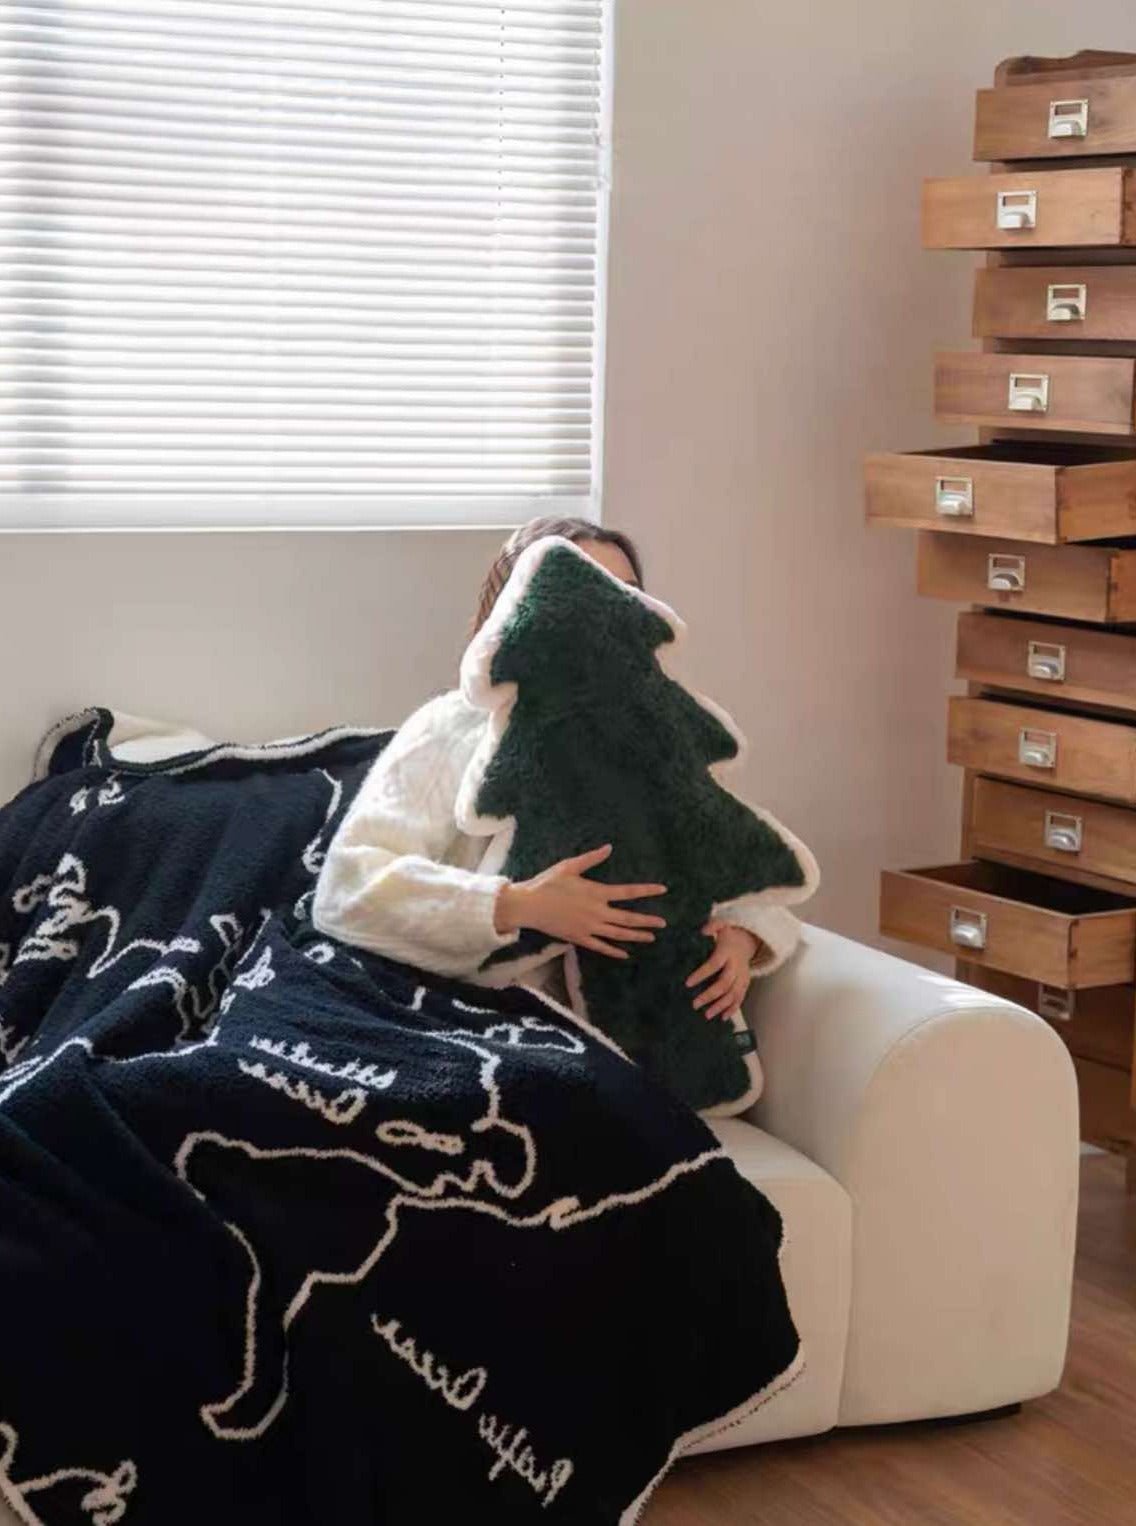 Christmas Tree Decorative Throw Pillow Cushion - Christmas Tree Decorative Throw Pillow Cushion - INSPECIAL HOME